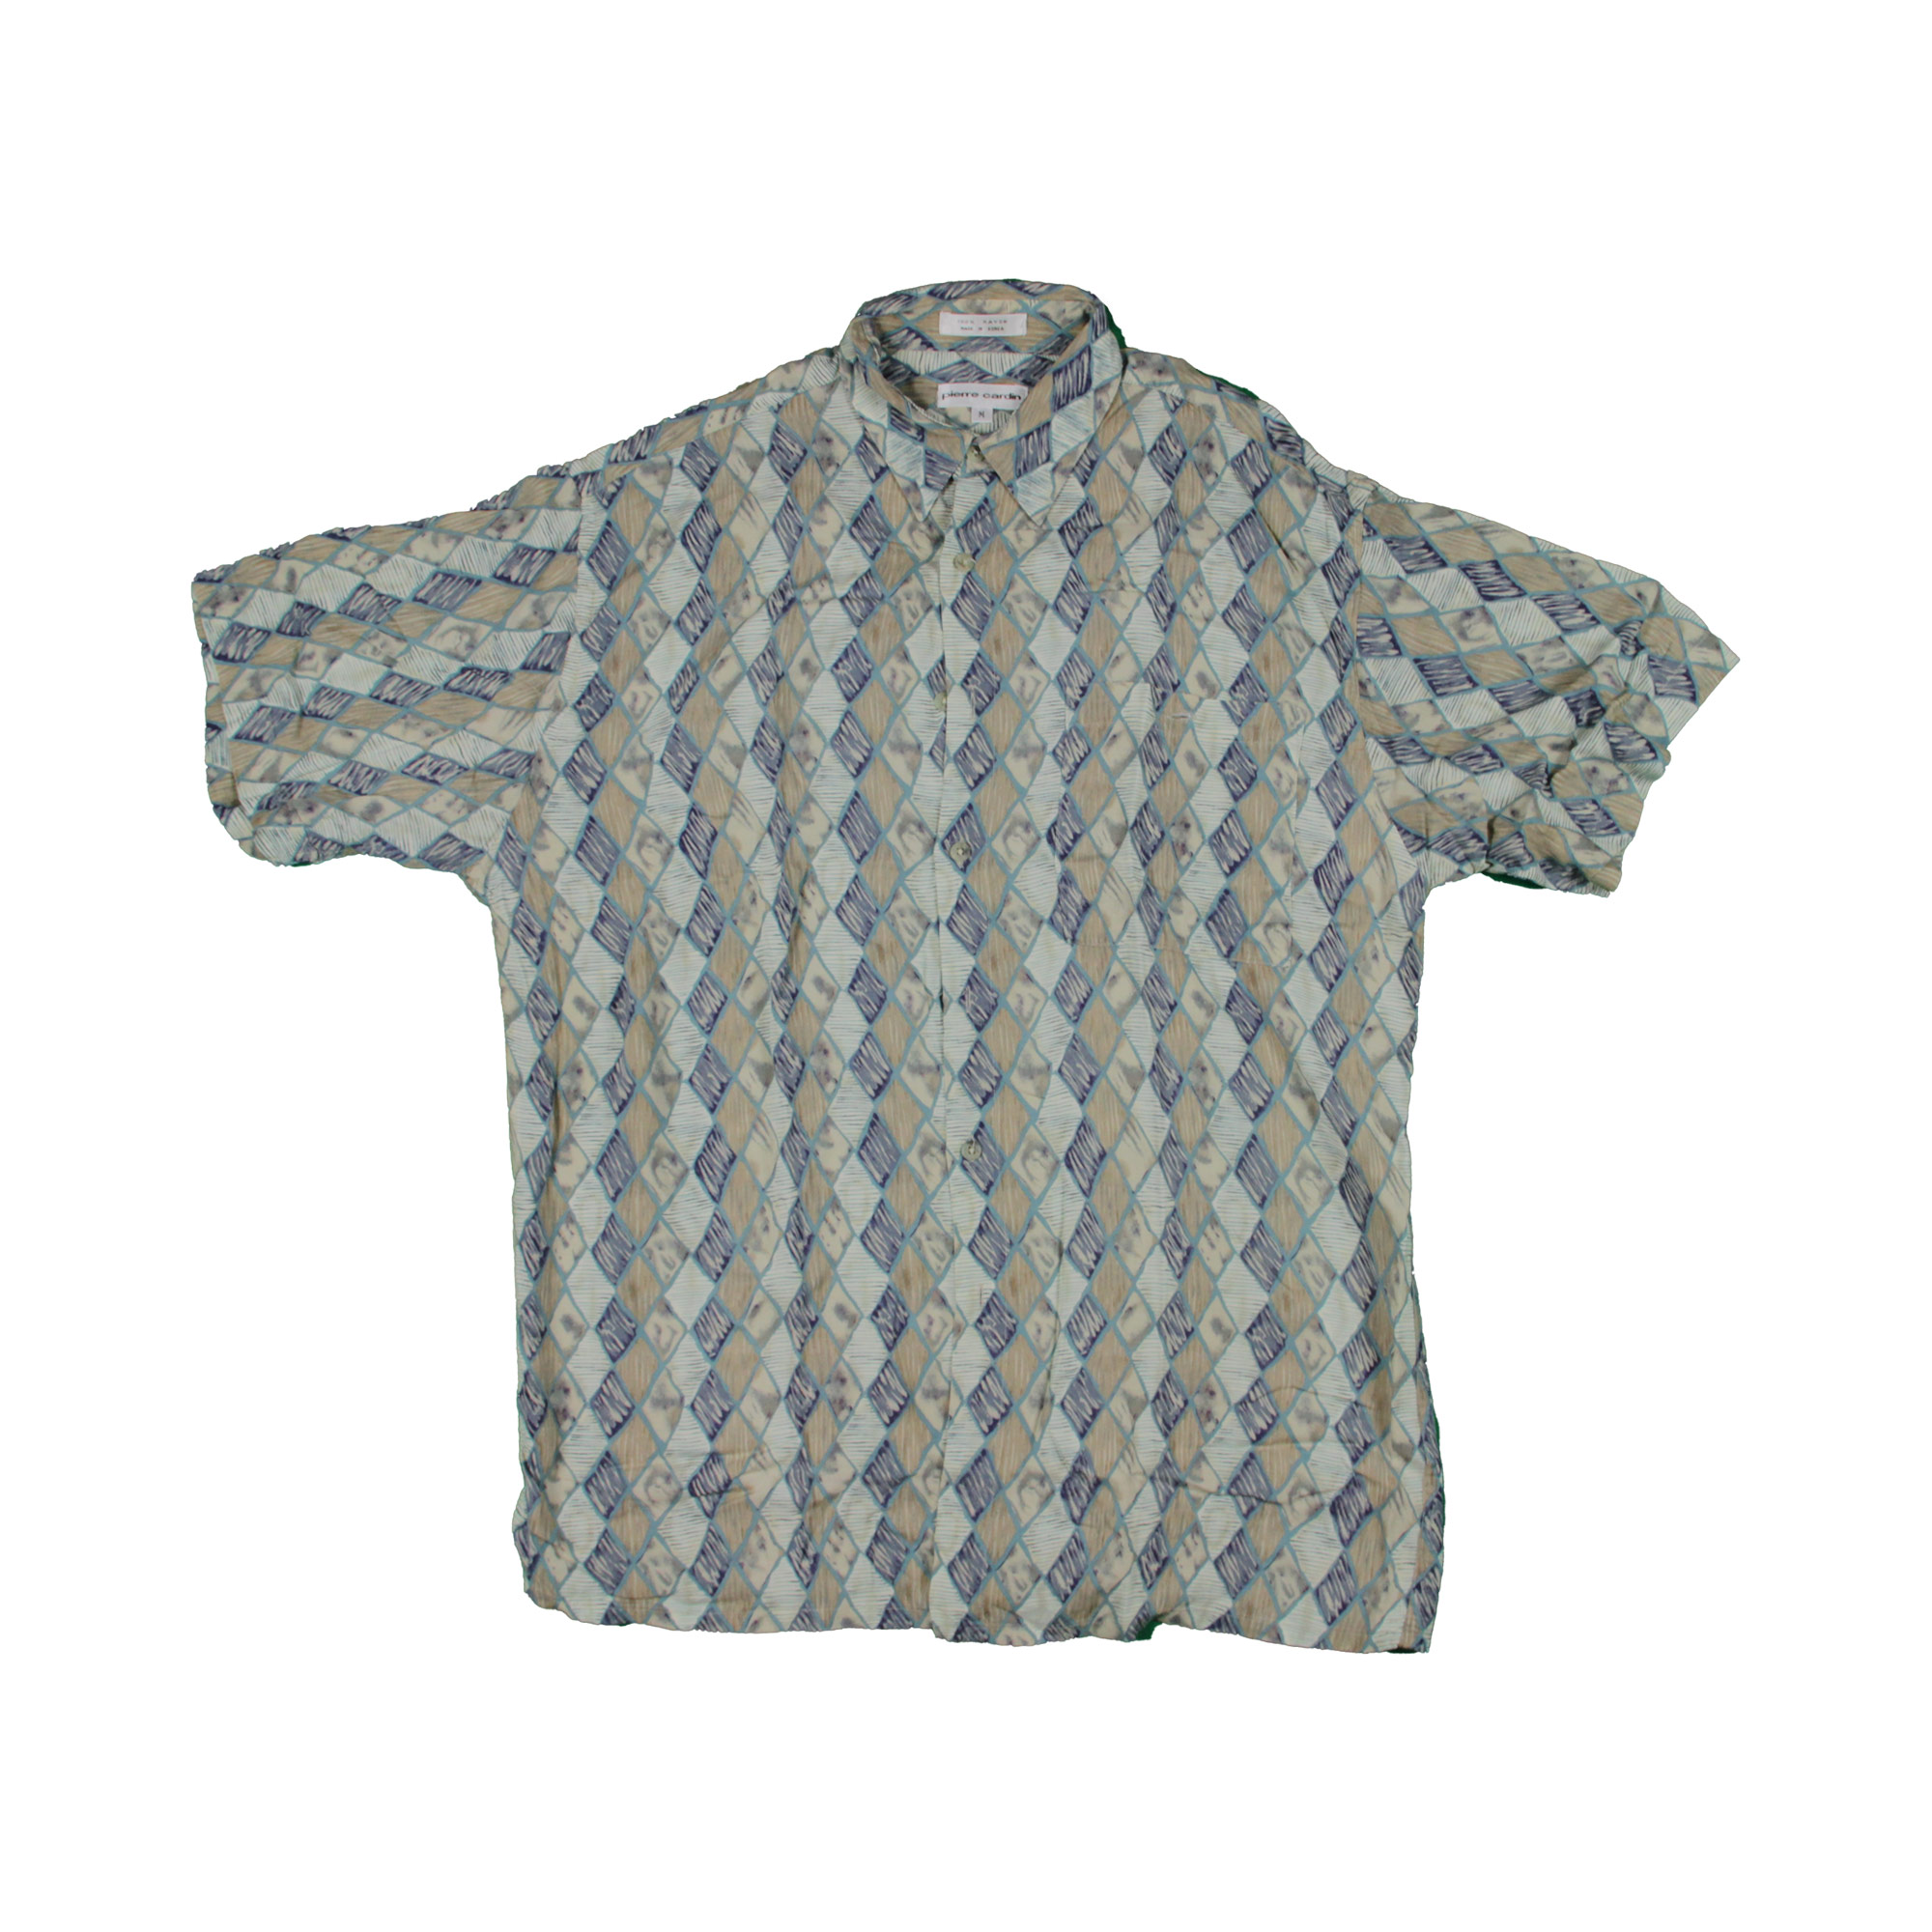 Pierro Cardin Vintage Shirt - M